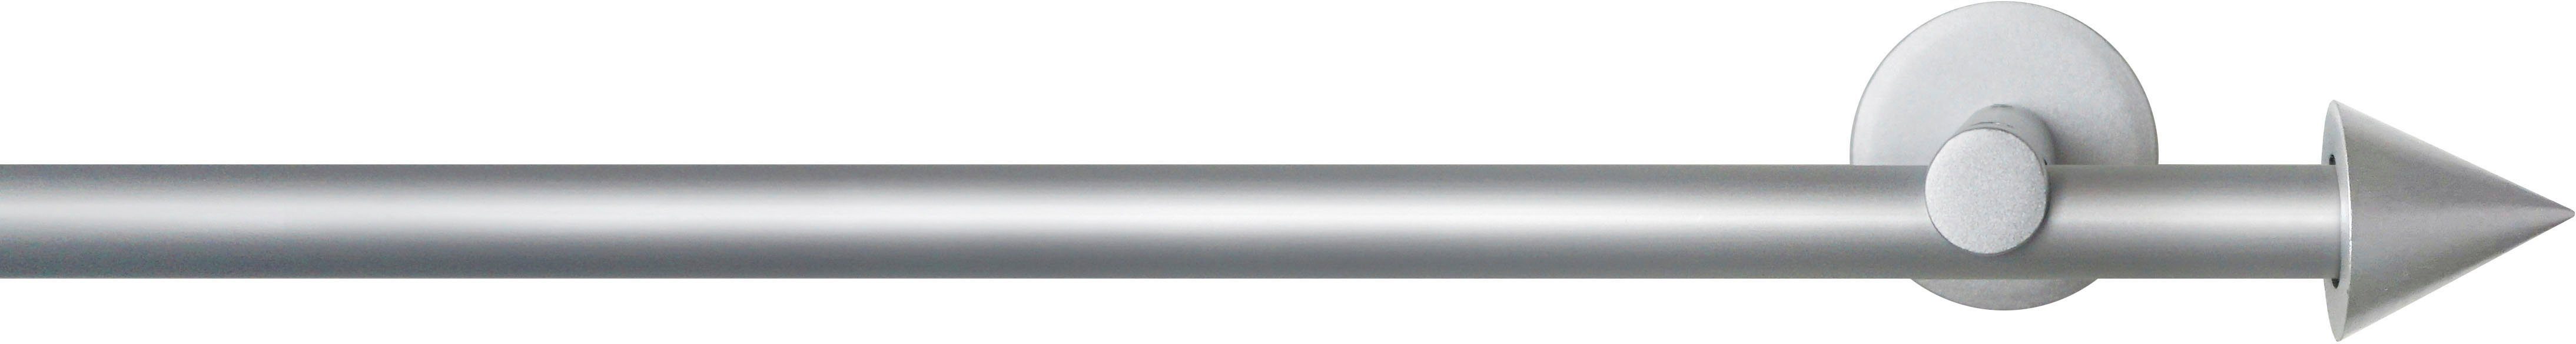 Gardinenstange SEFRA, GARESA, Ø 16 mm, 1-läufig, Wunschmaßlänge, verschraubt, Aluminium, Vorhanggarnitur,Innenlaufgarnitur, verlängerbar, Endknopf Spitze